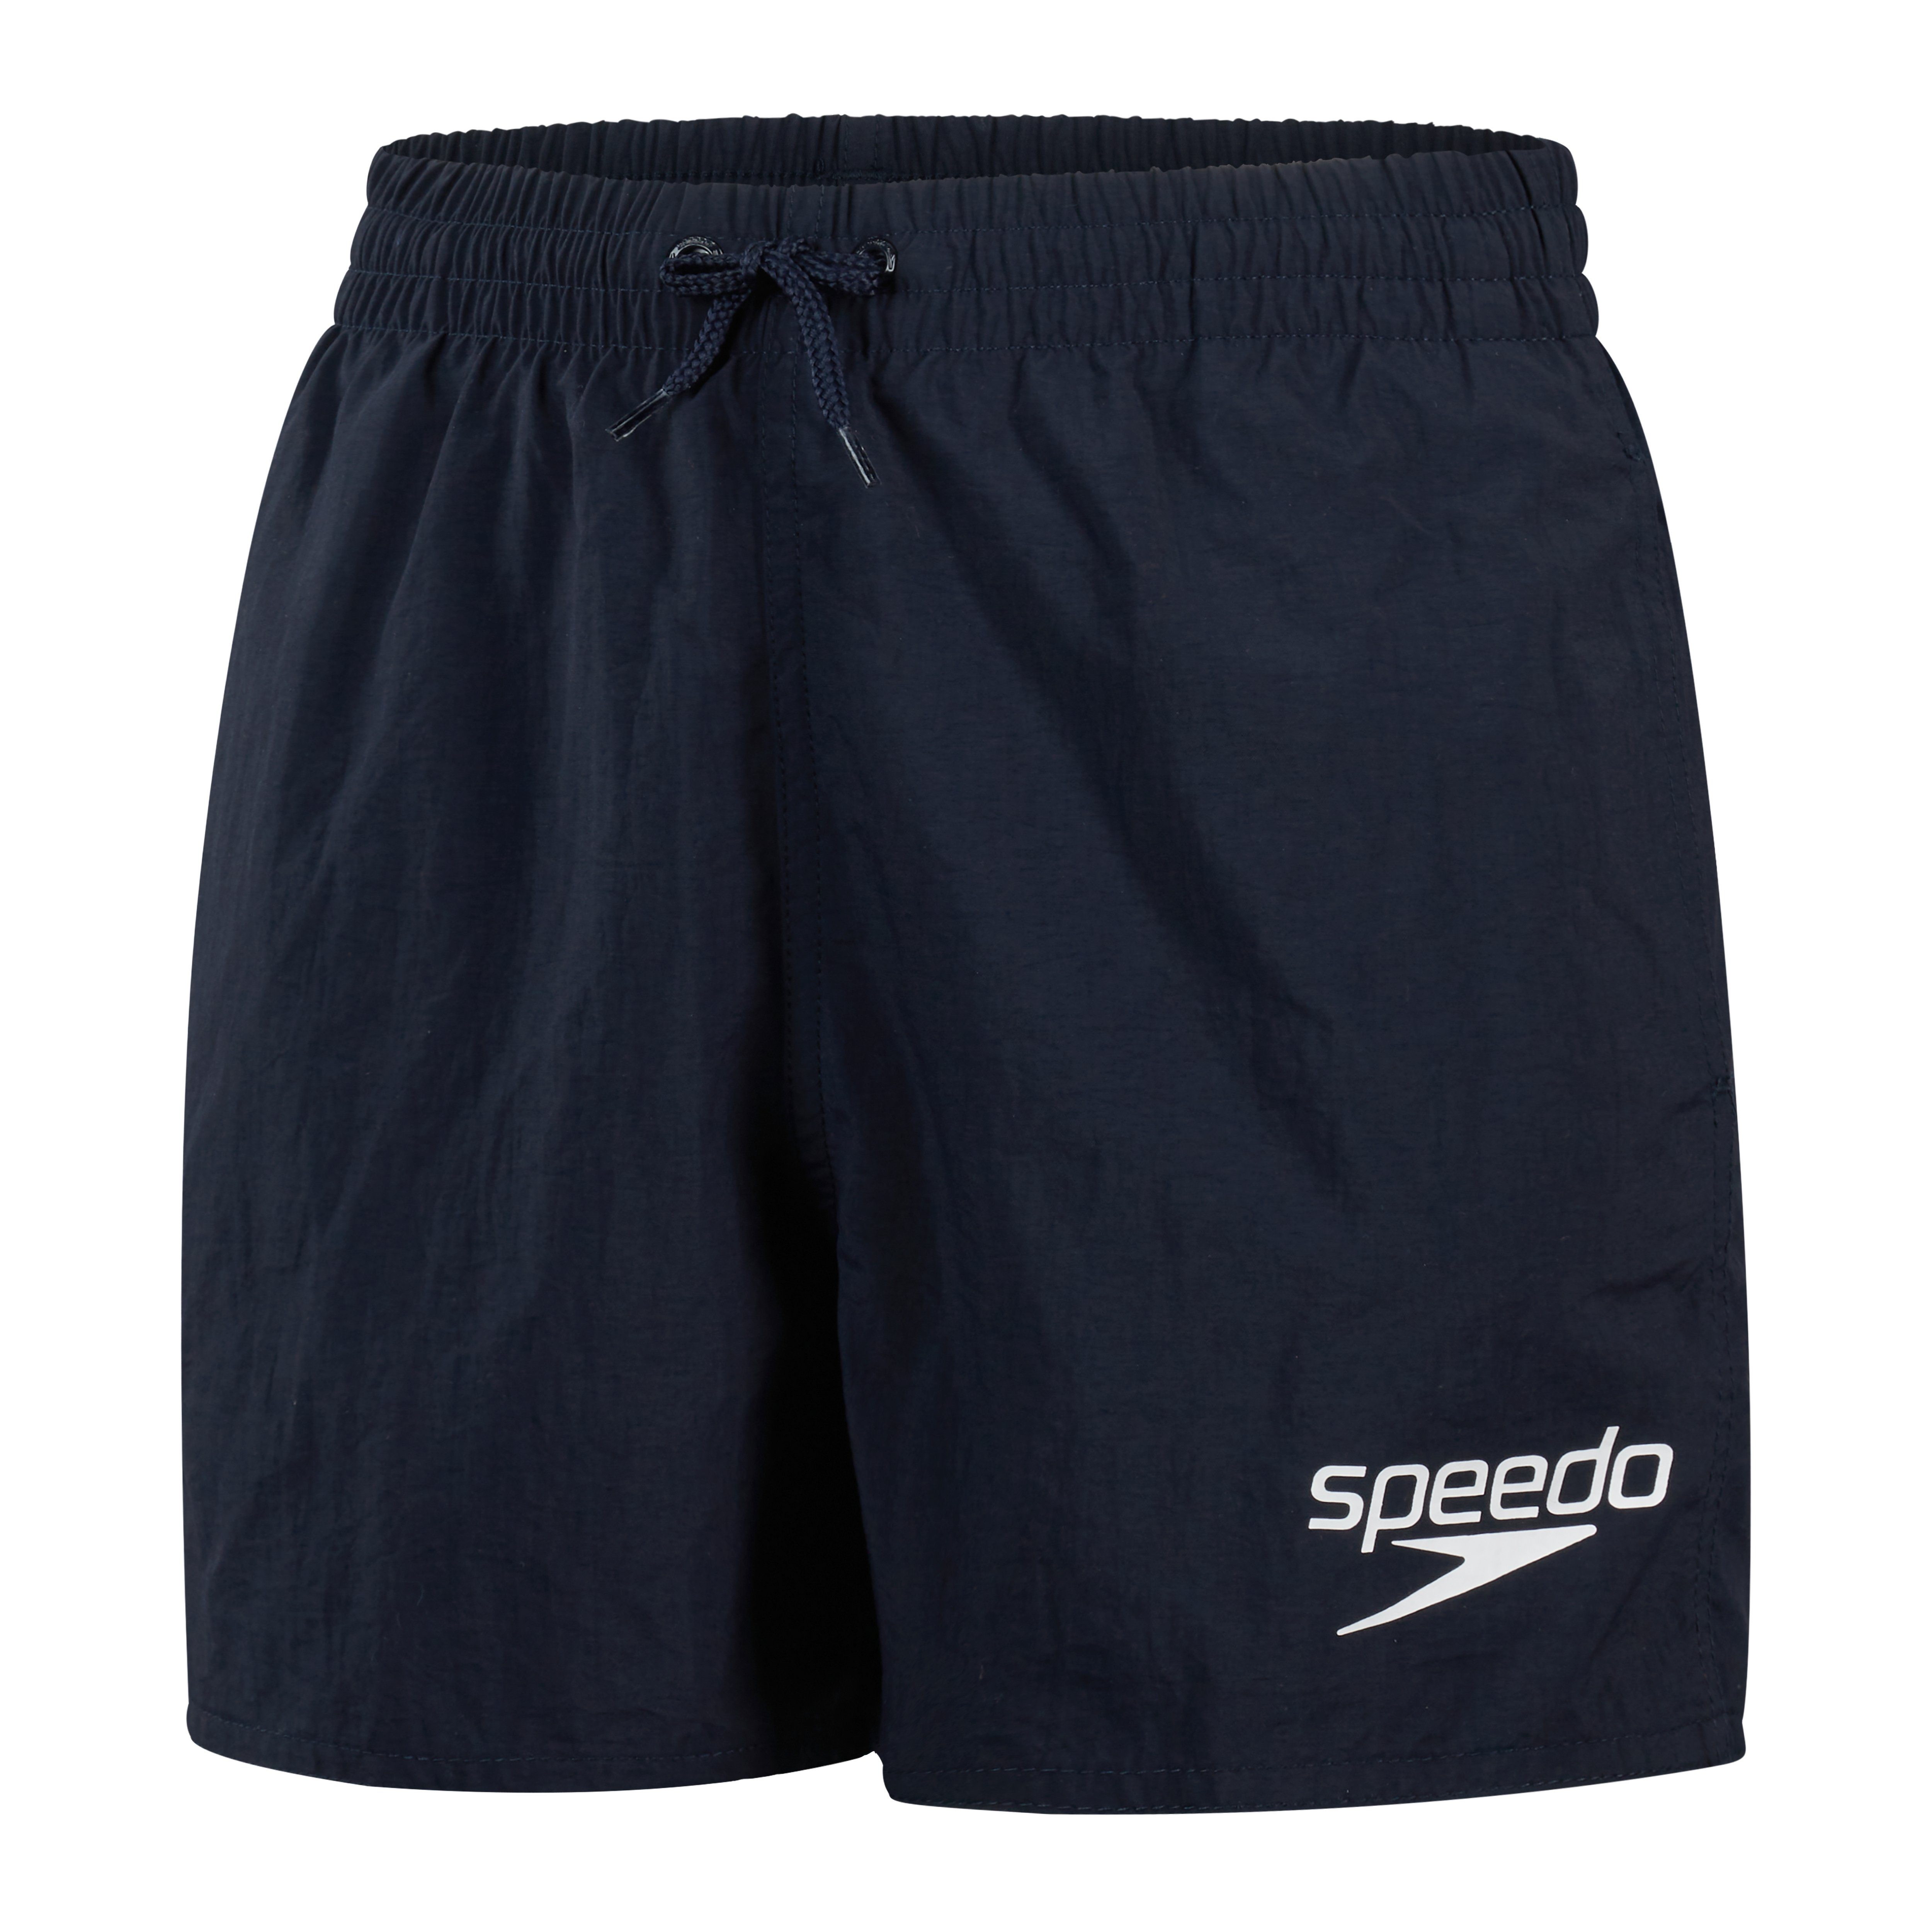 Speedo Badeshorts Kinder Bade-Shorts John Verstellbare Passform True Navy | Badeshorts